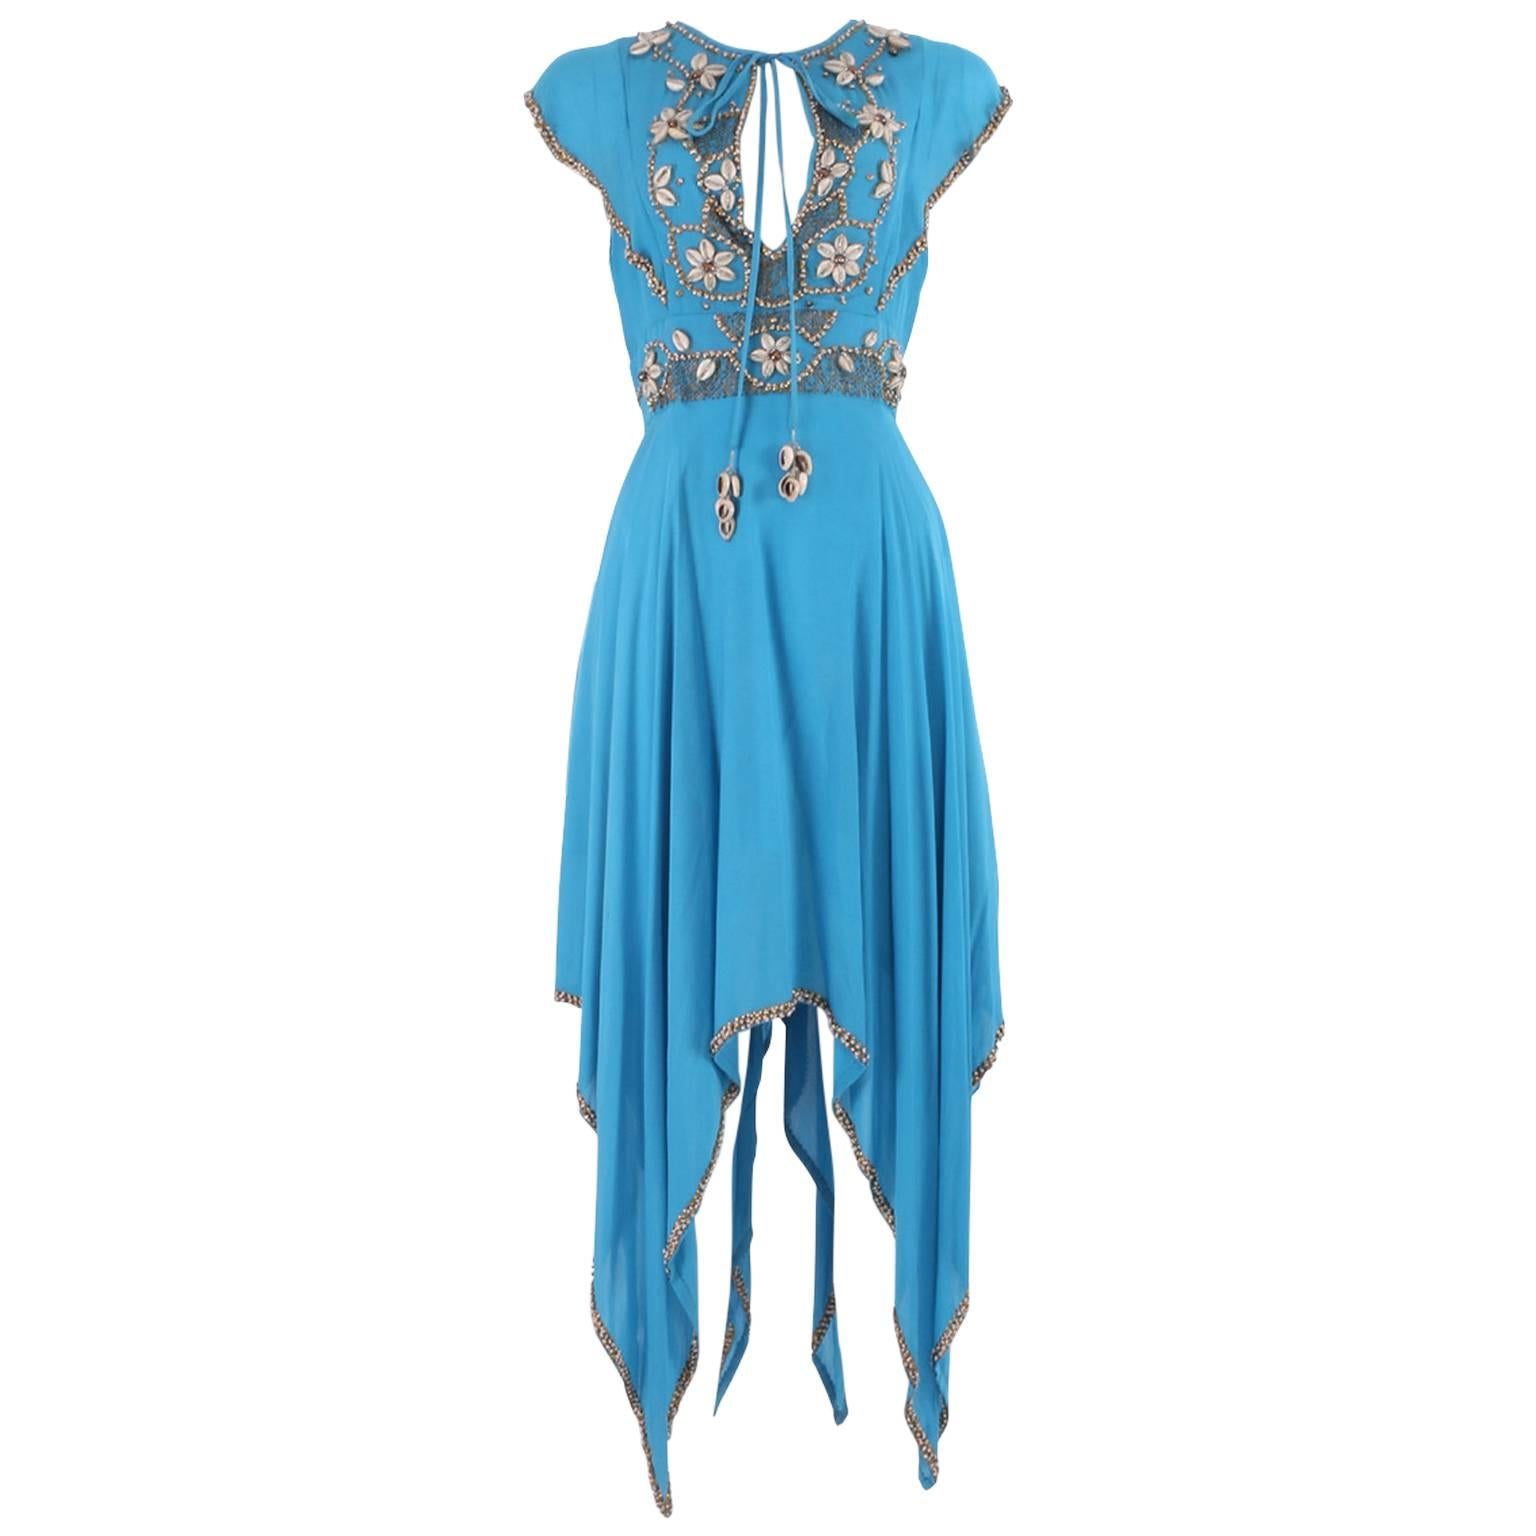 Matthew Williamson Cerulean Blue Dress with Beaded Shell Detail Size UK 10